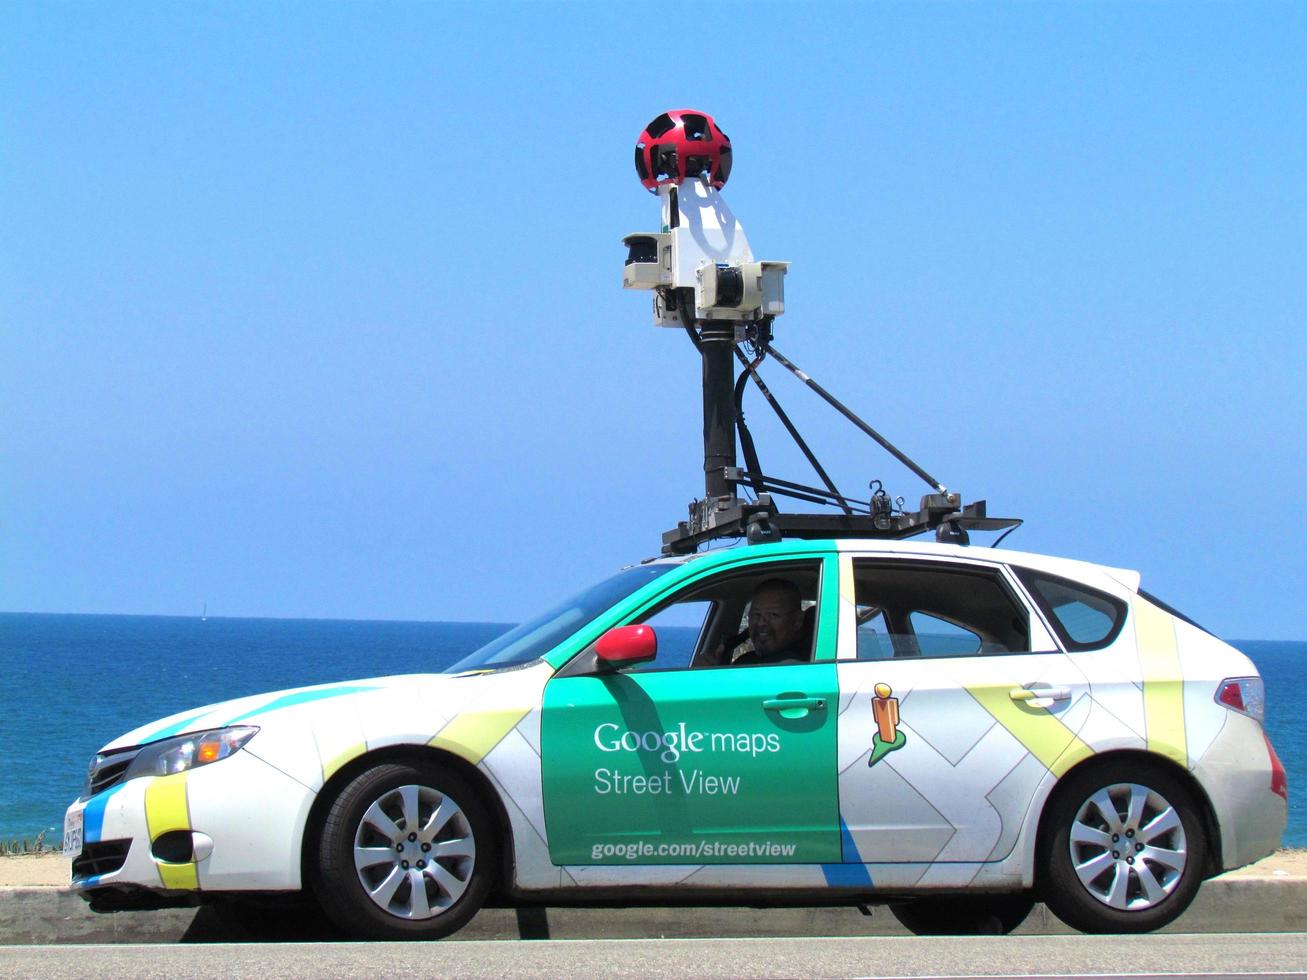 White and green Google Maps hatchback photo